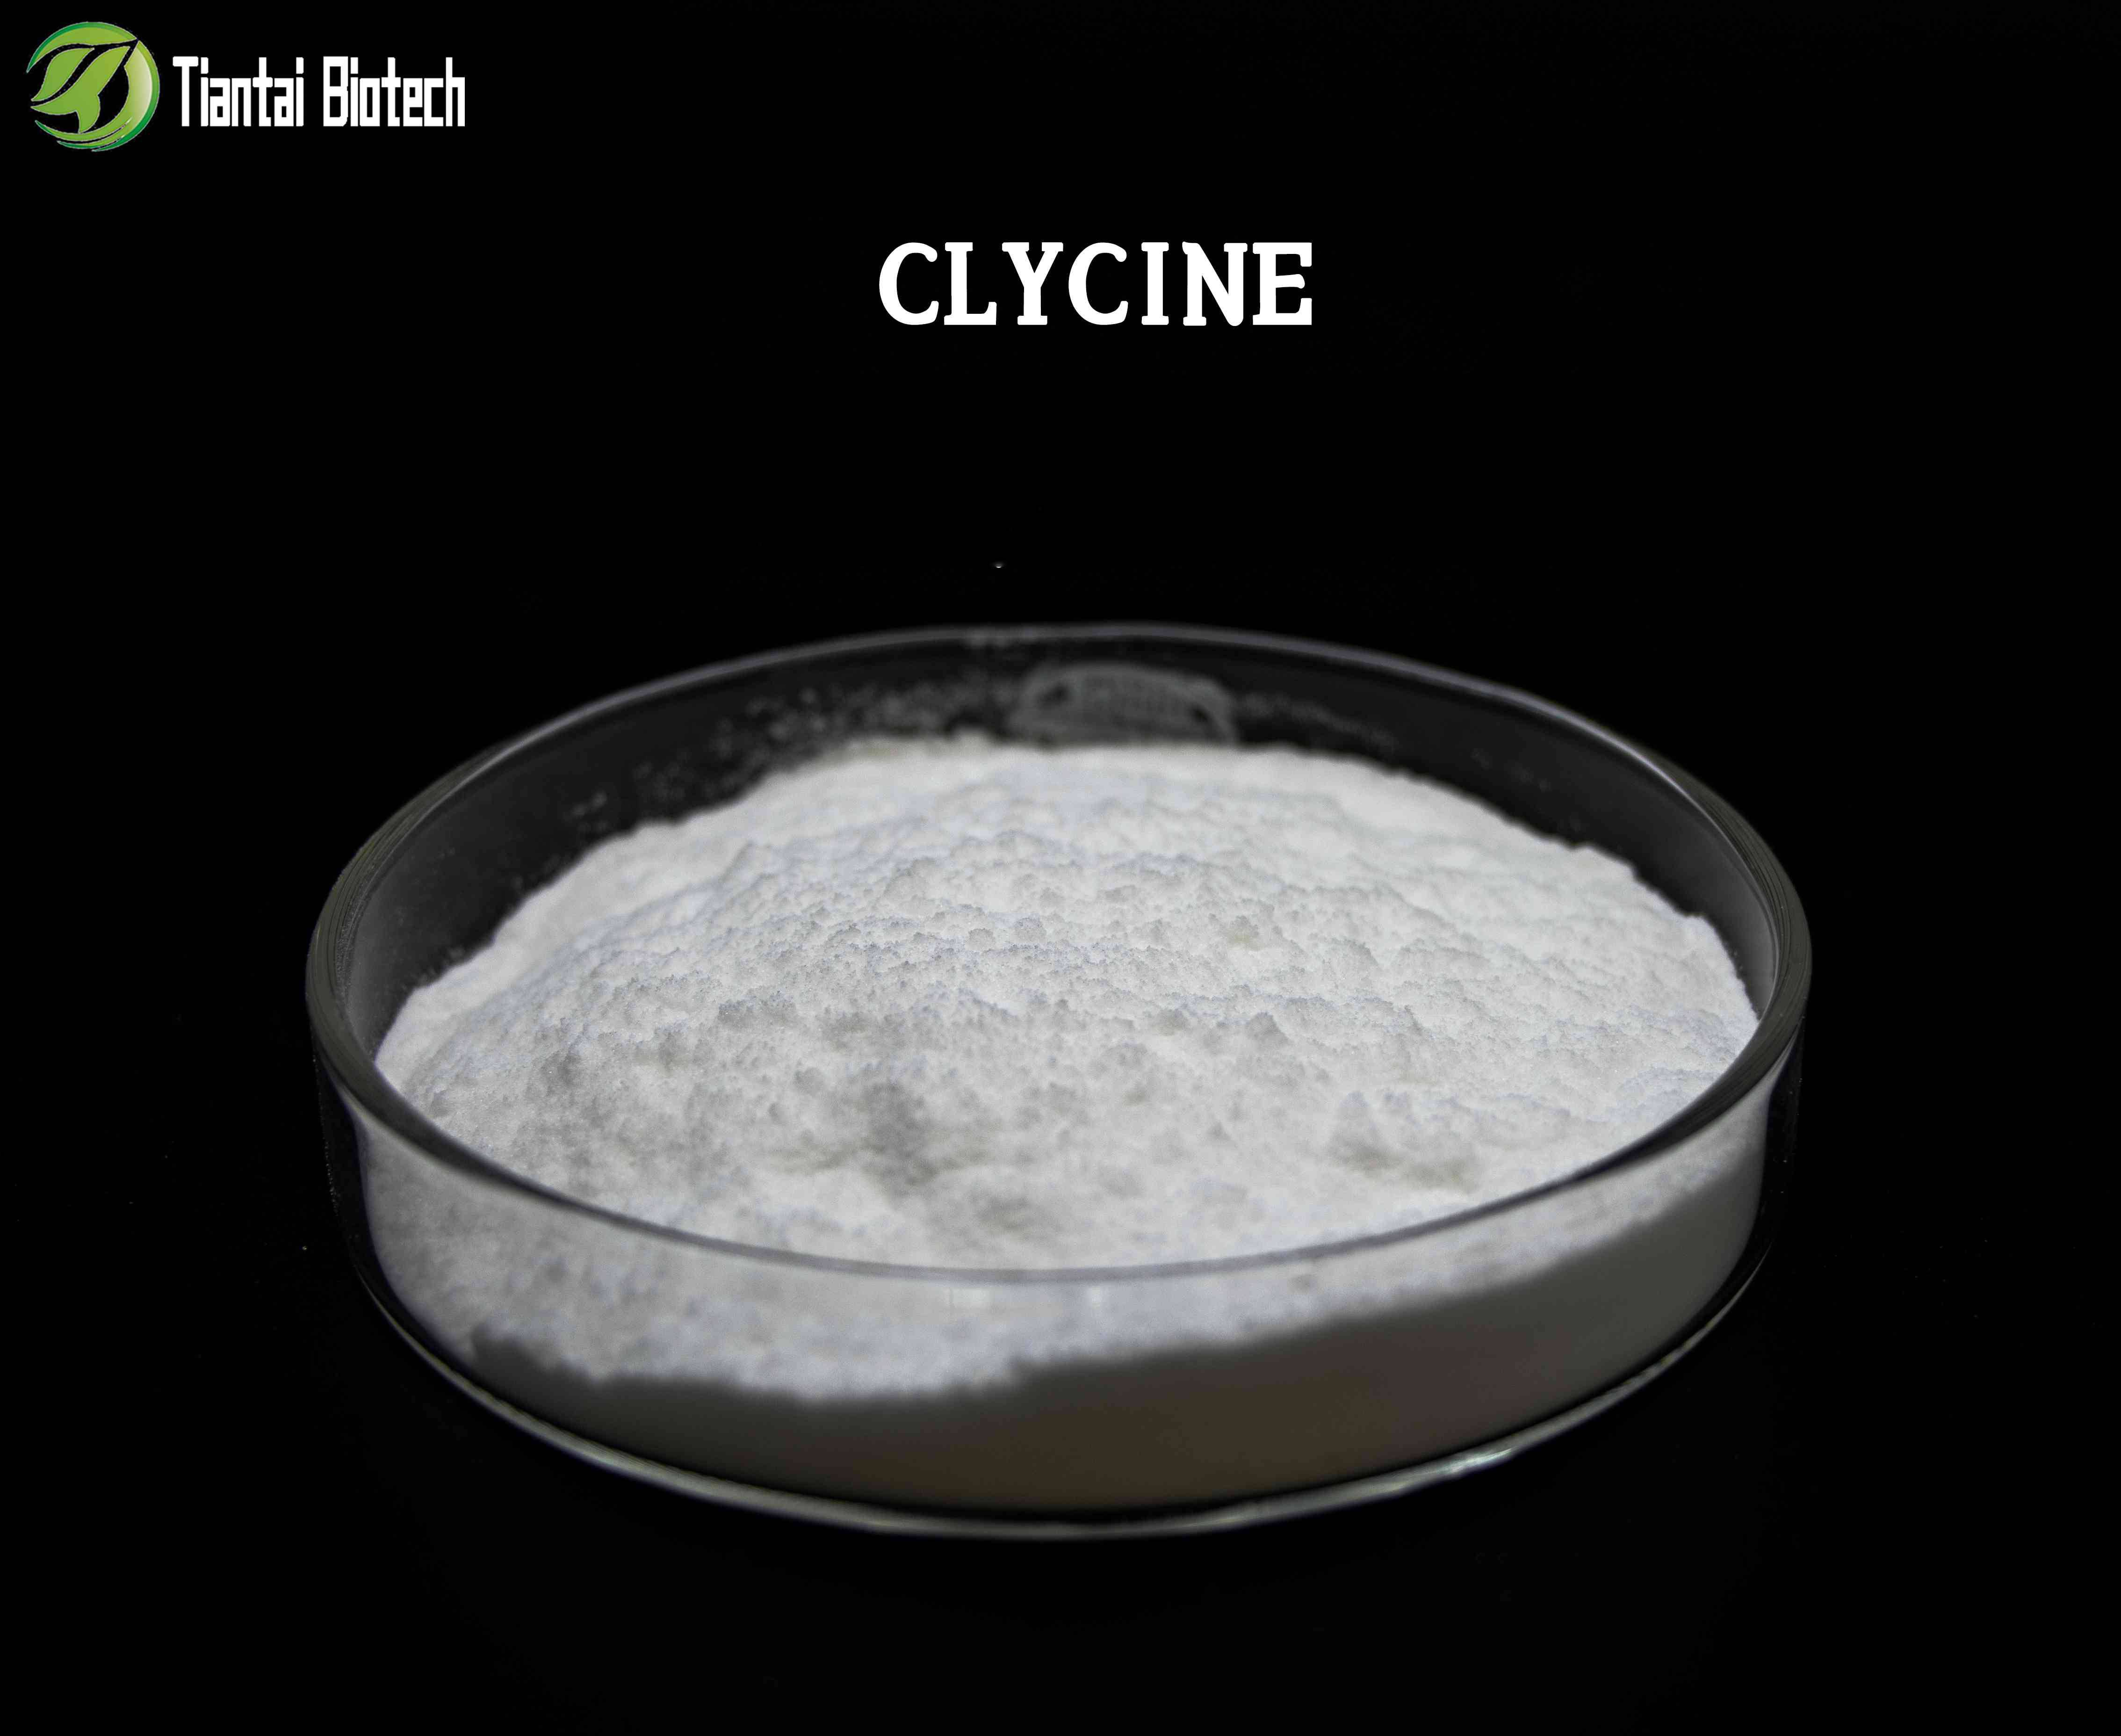 CLYCINE